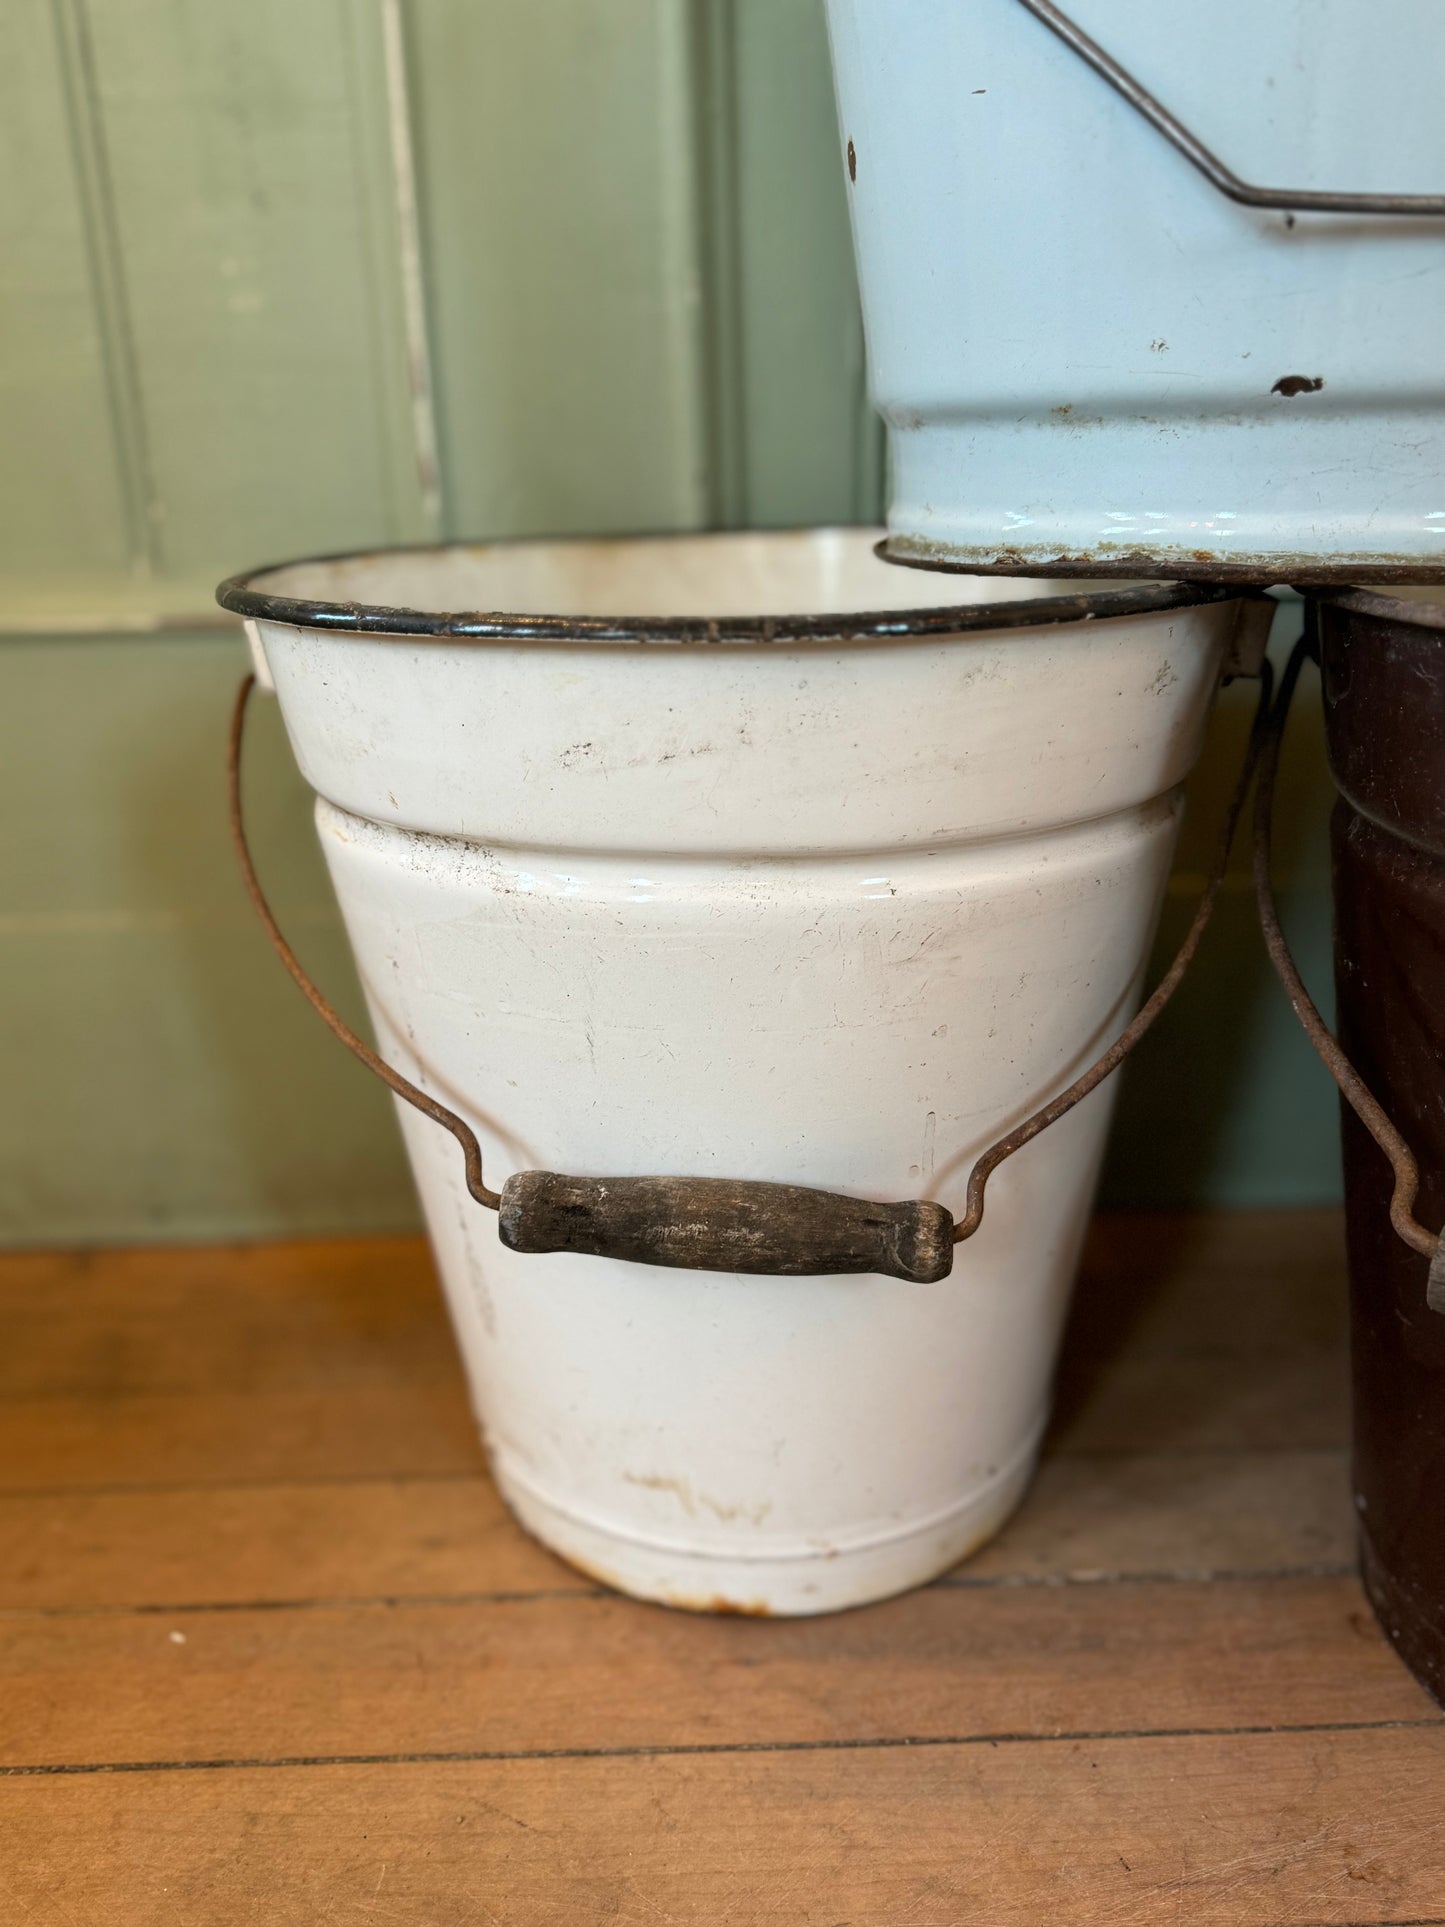 Antique European Enamel Buckets